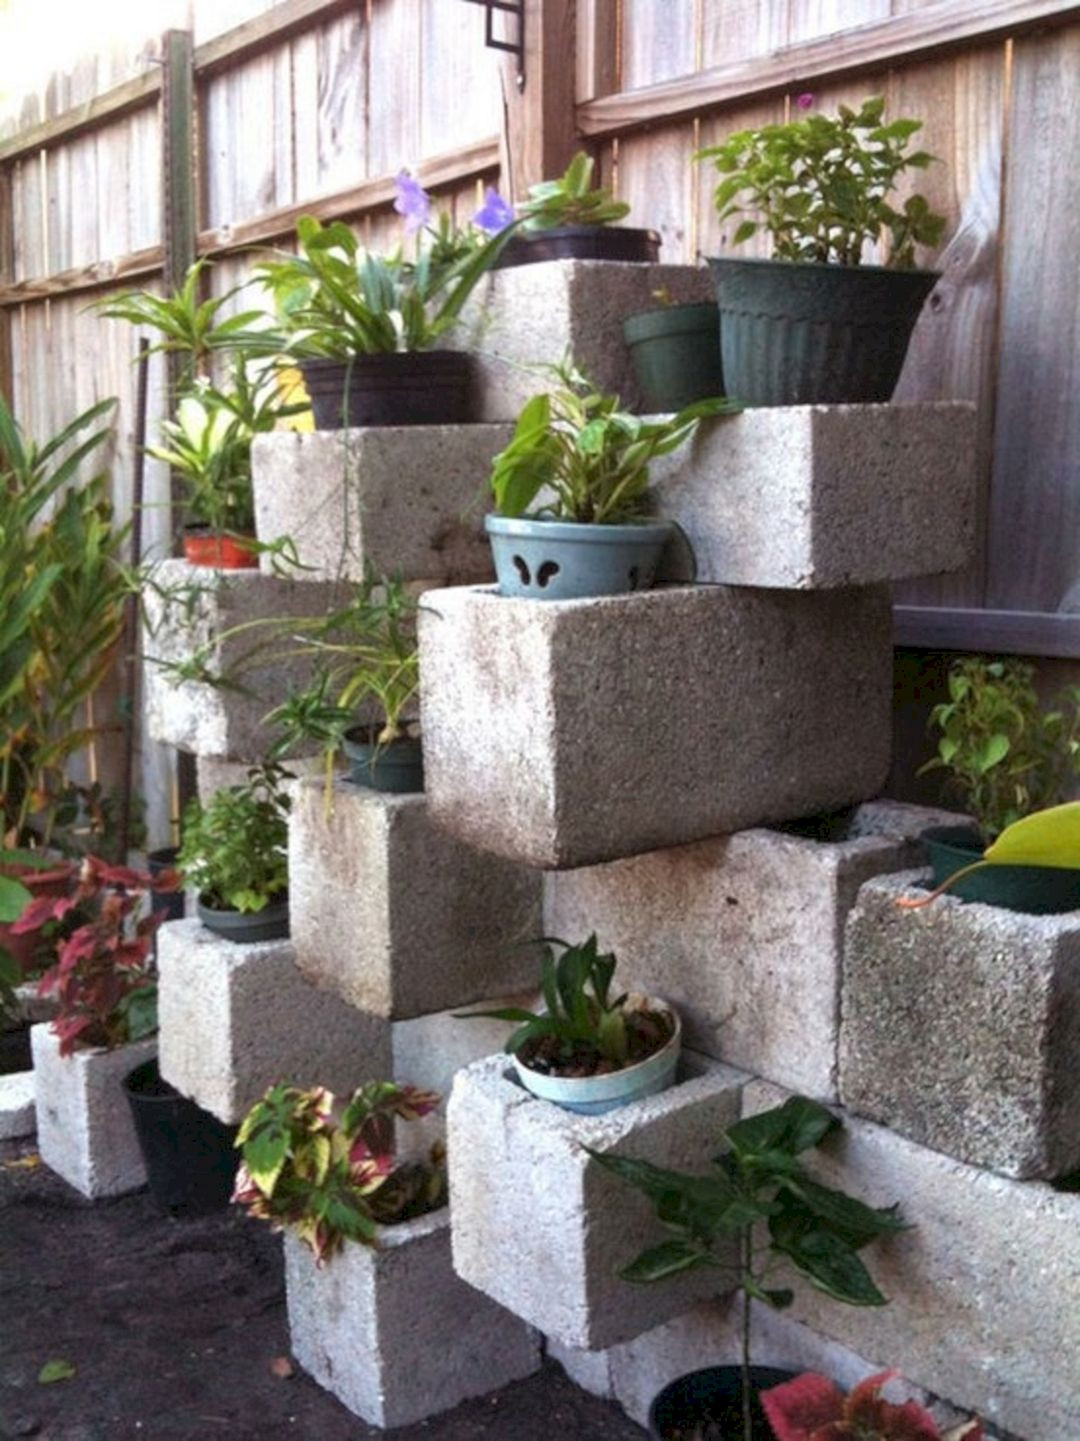 Best ideas about Cinder Block Garden Ideas
. Save or Pin Cinder Block Garden Wall Ideas – 24 SPACES Now.